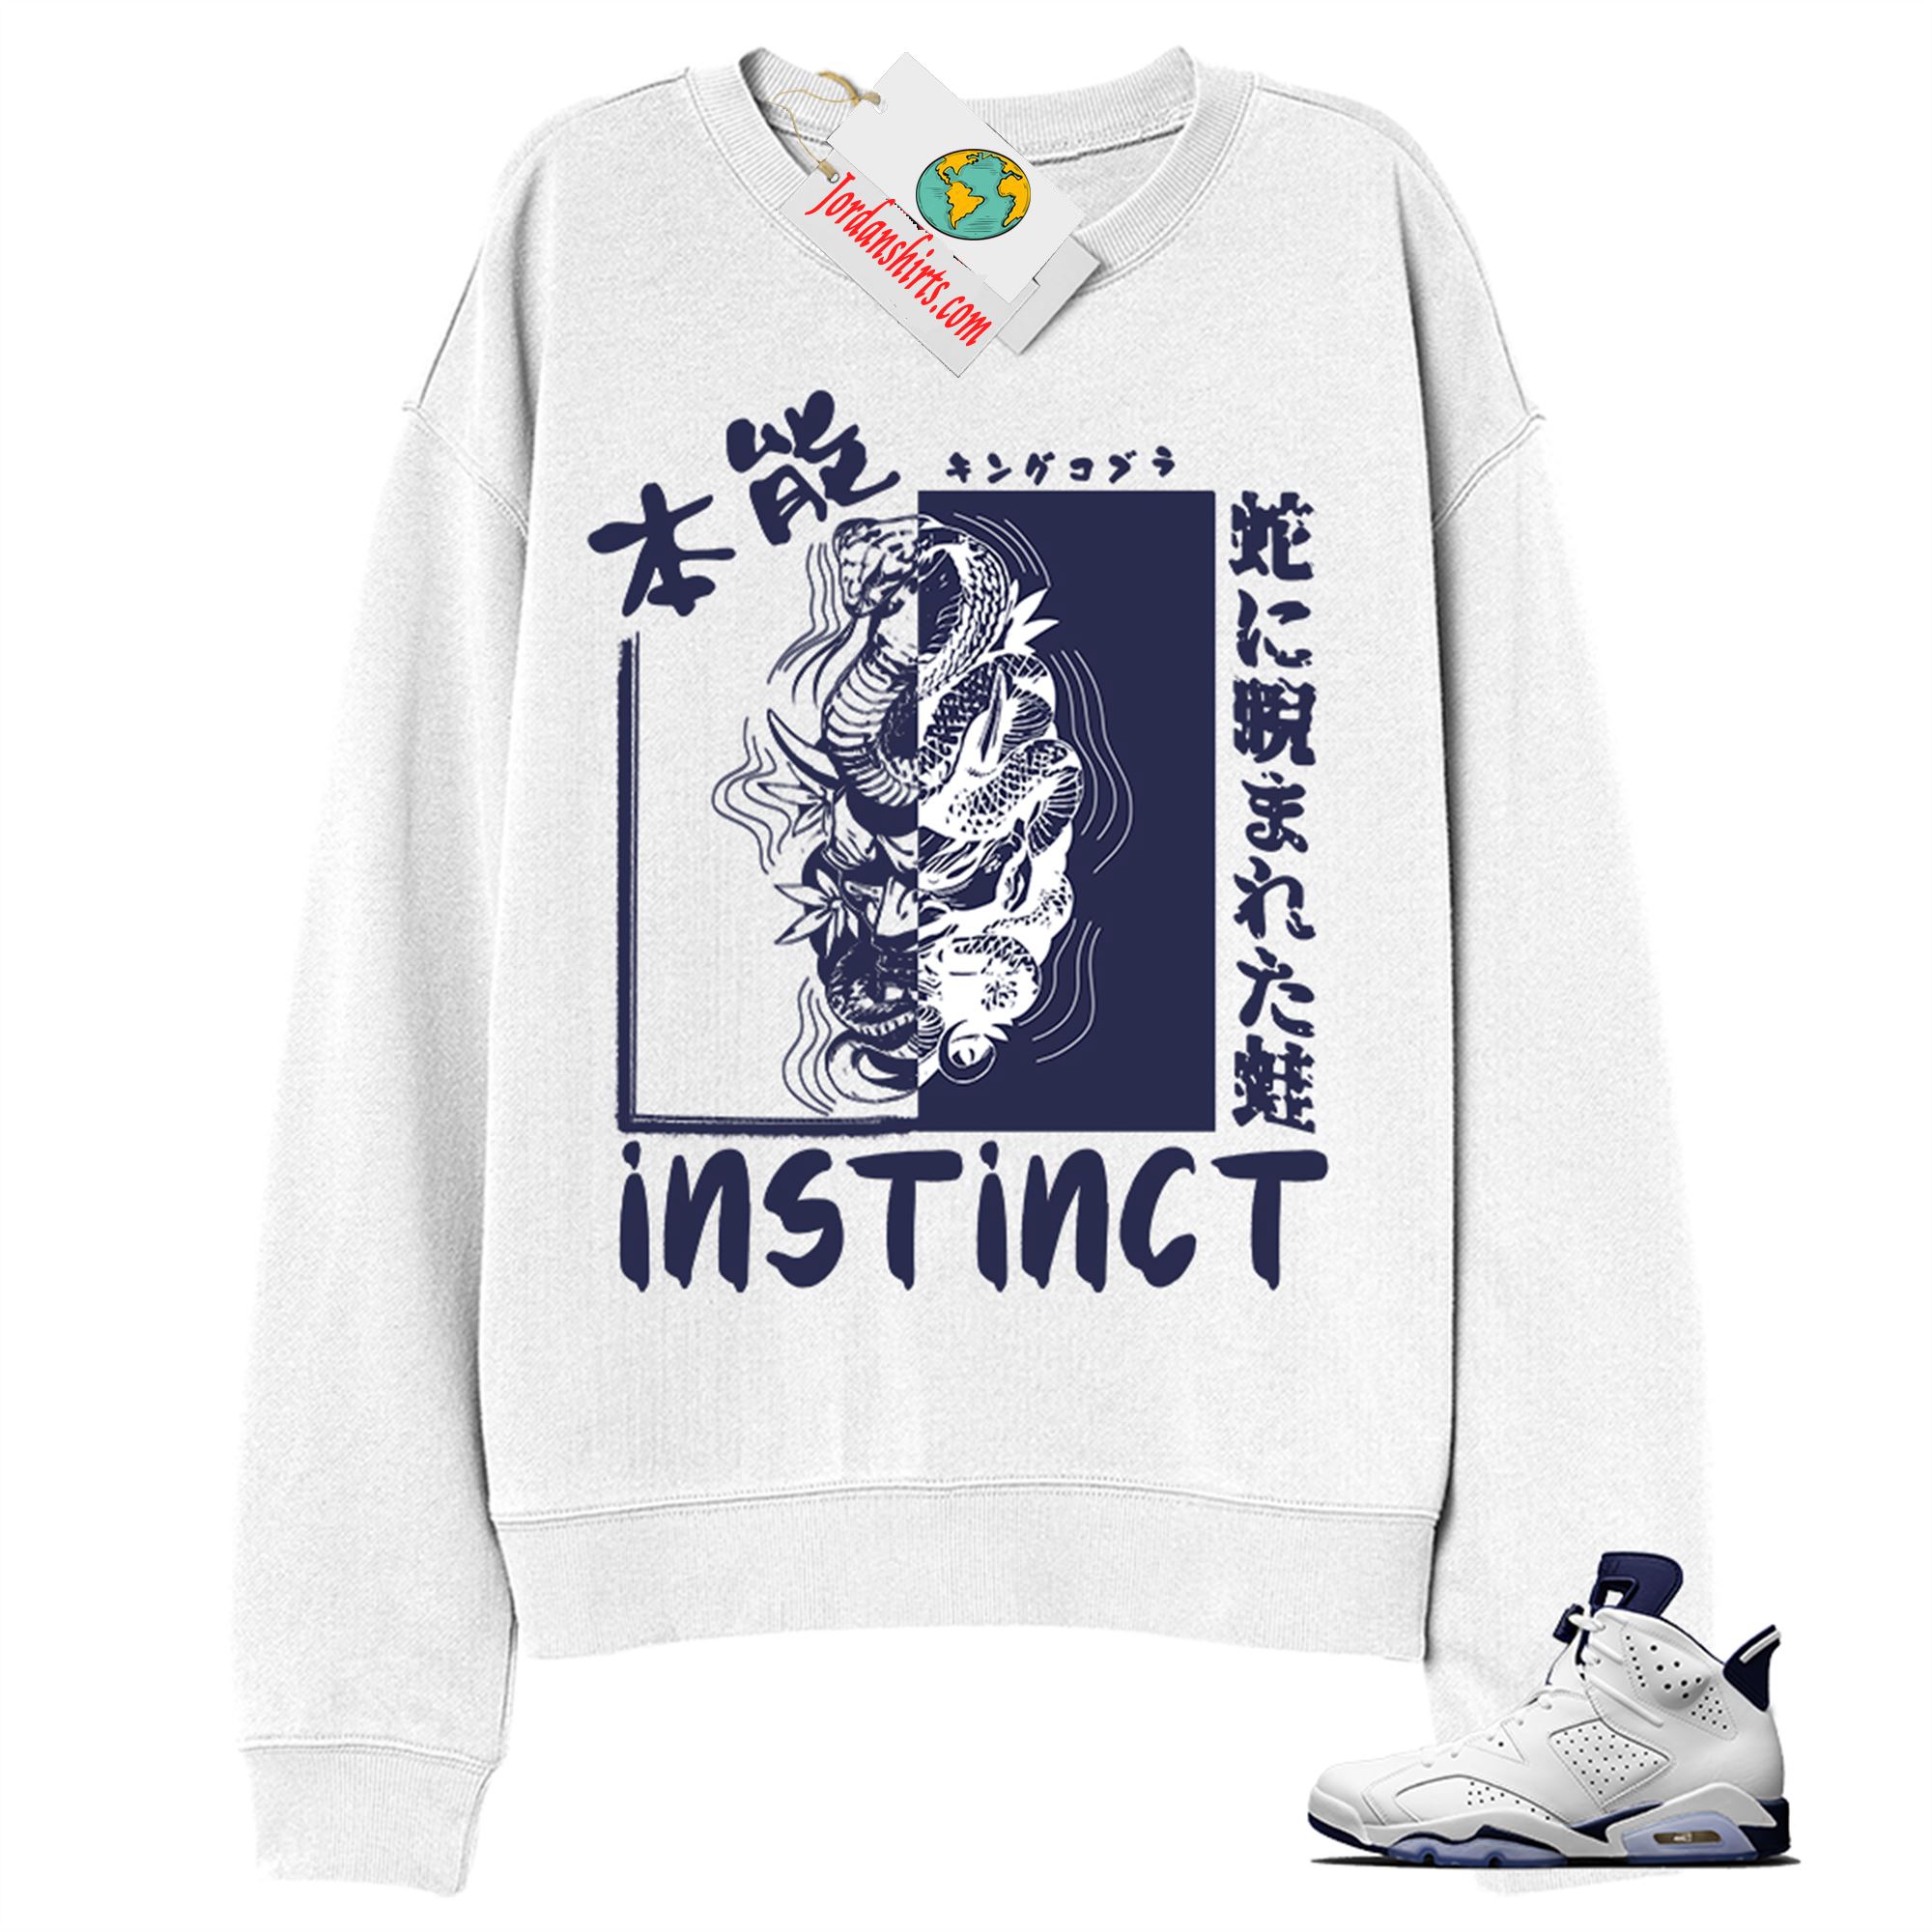 Jordan 6 Sweatshirt, Instinct Fearless Snake White Sweatshirt Air Jordan 6 Midnight Navy 6s Size Up To 5xl